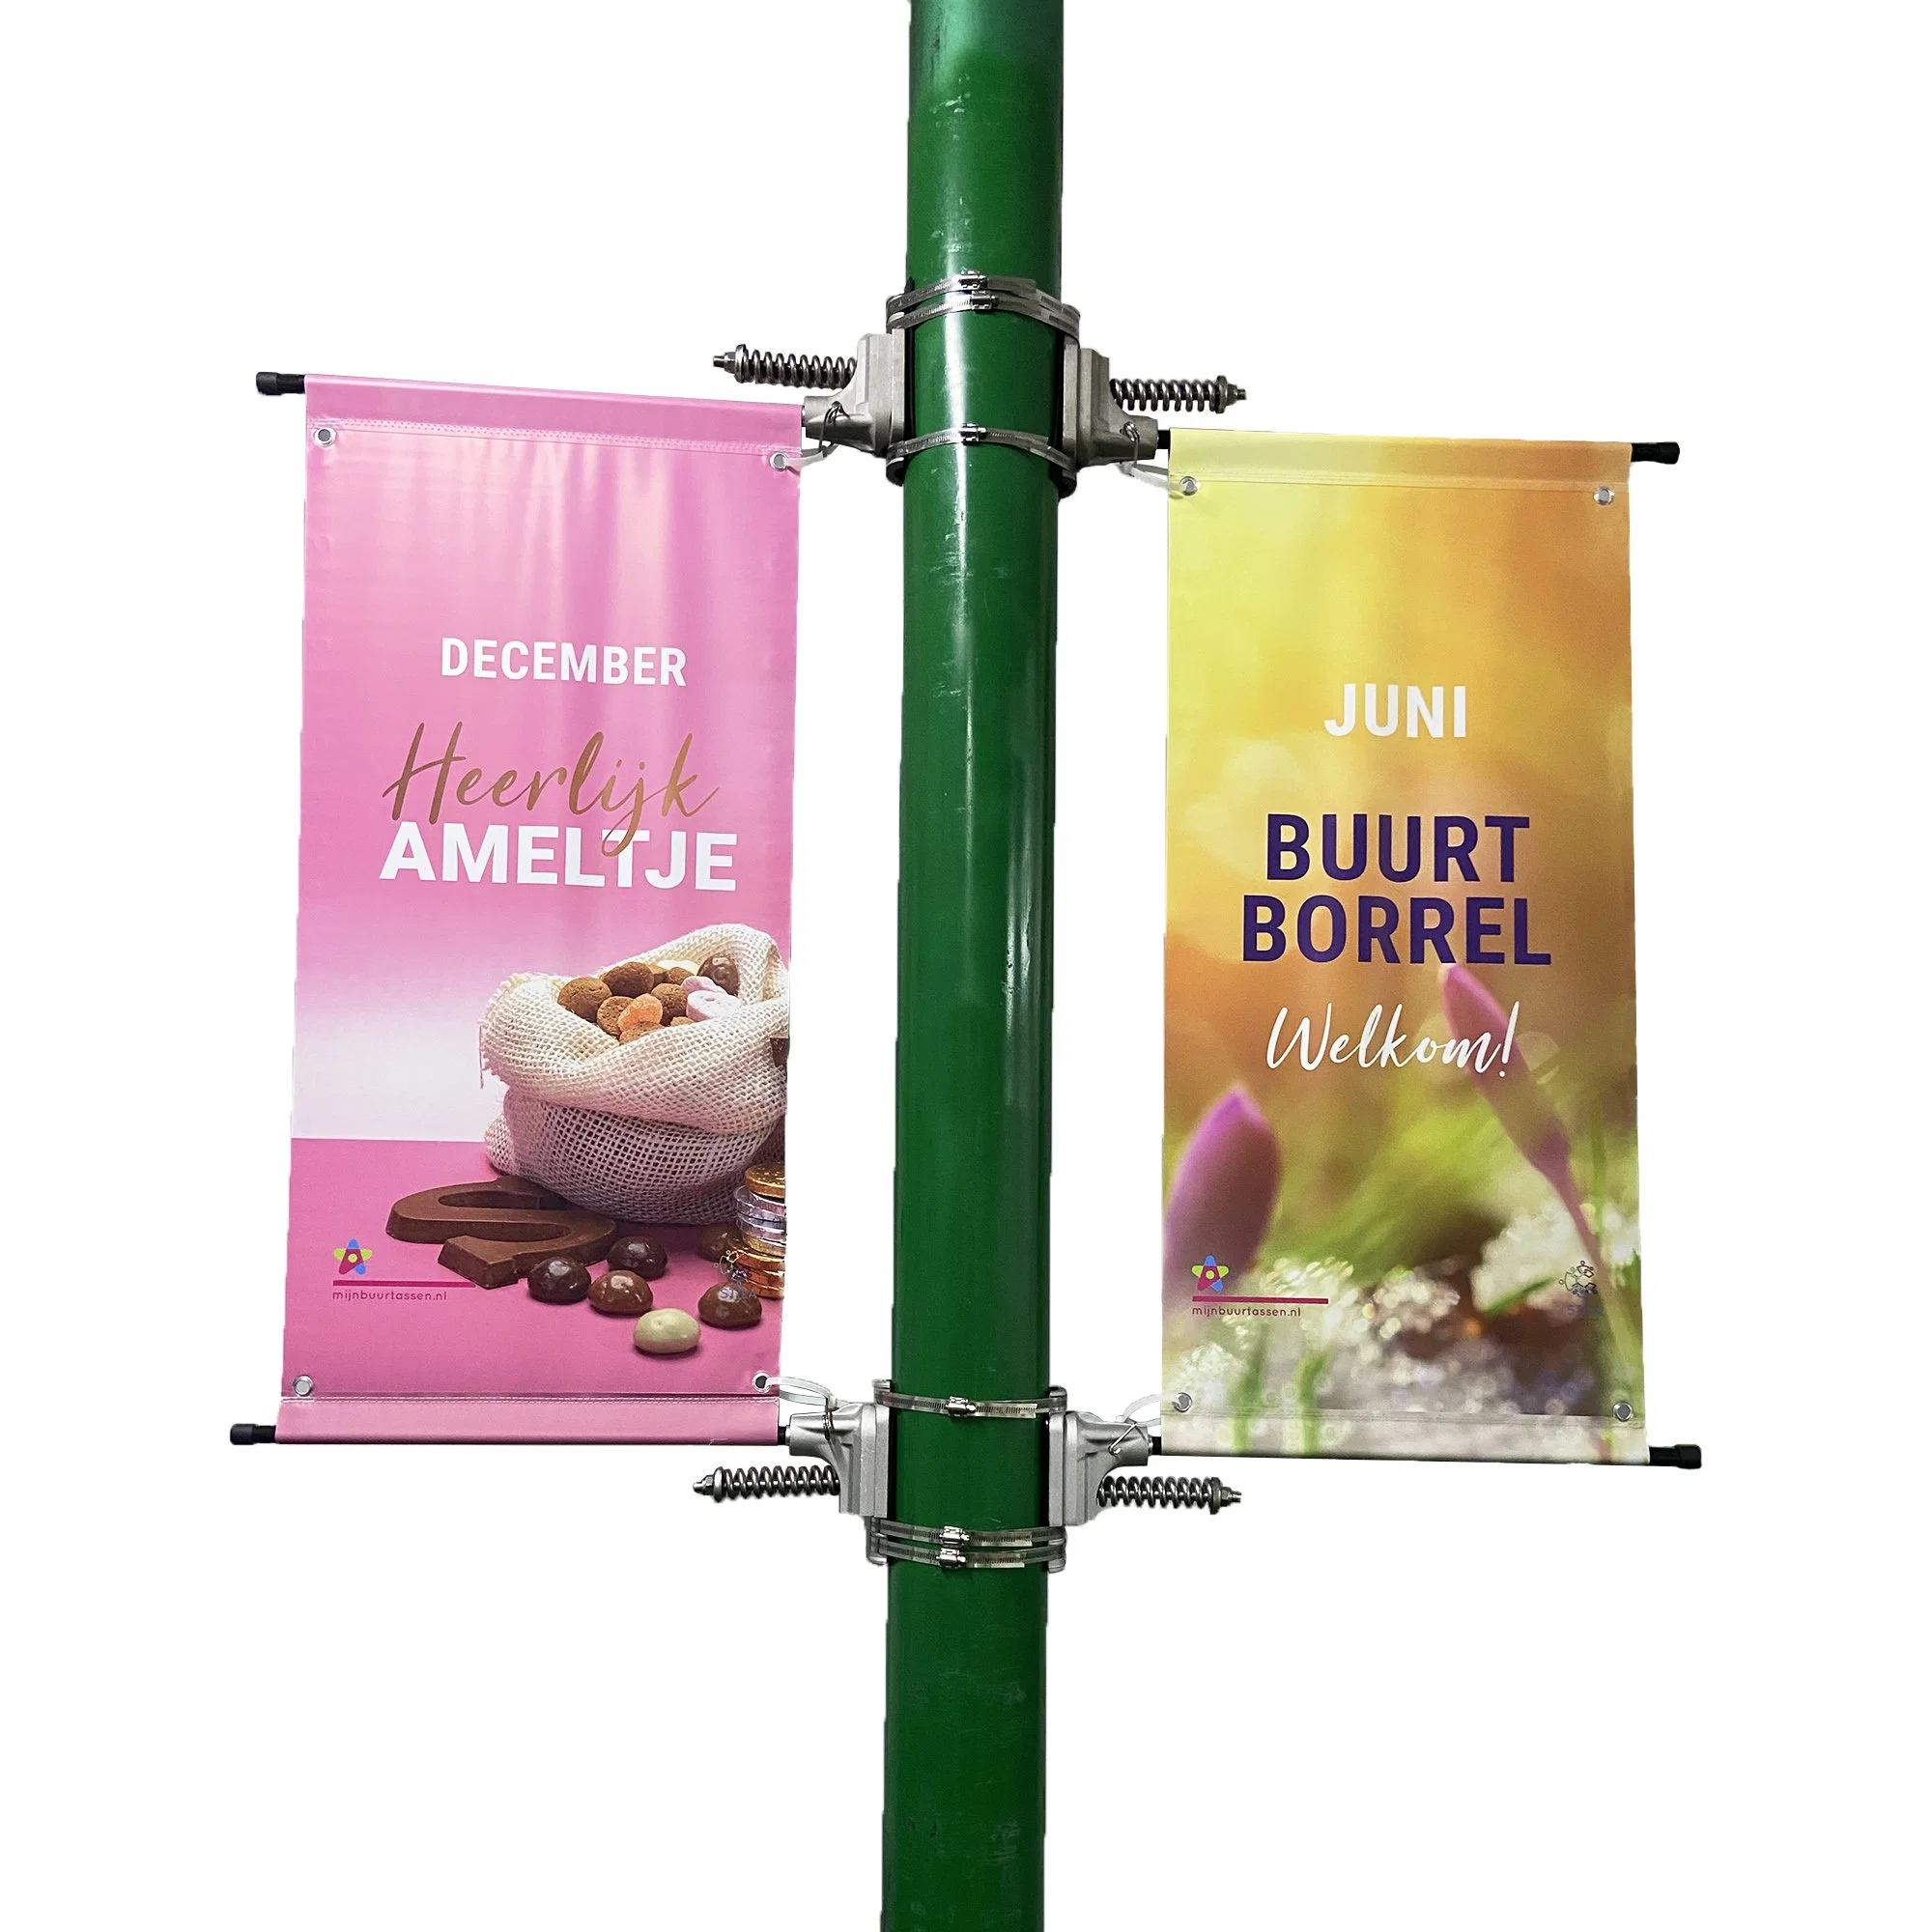 Metal Street Pole Advertising Sign Equipment (BT-A)